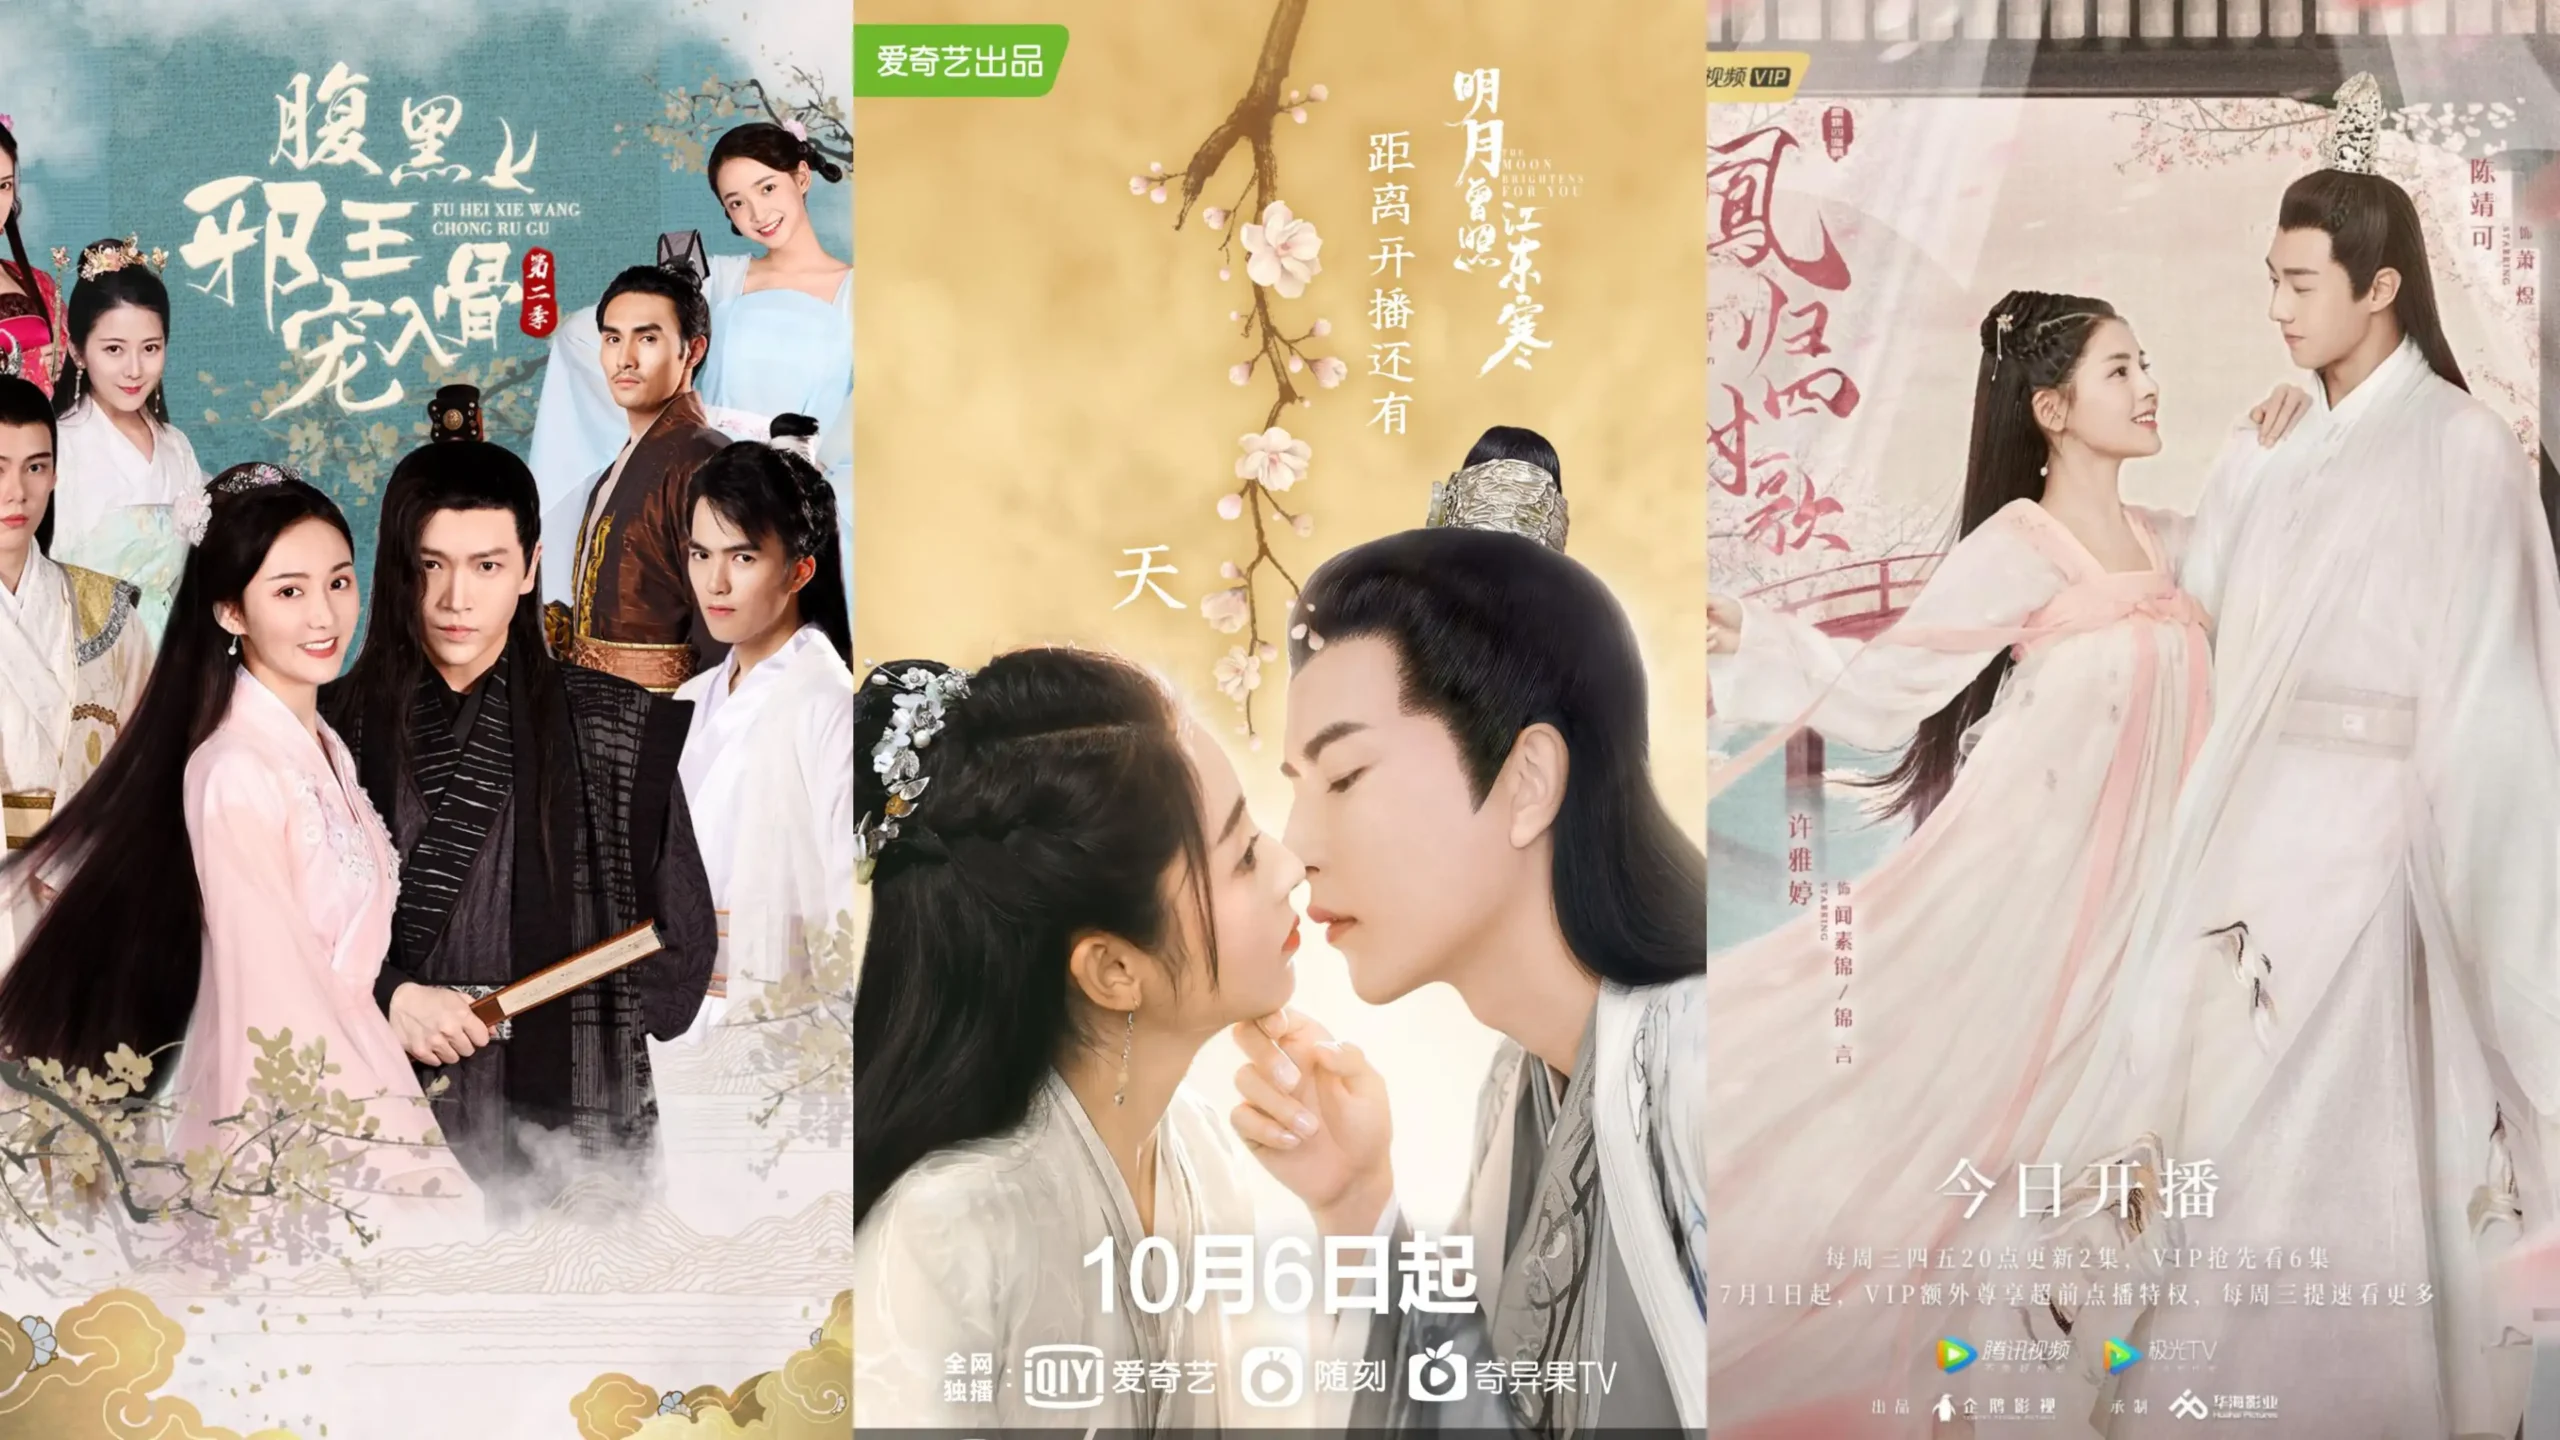 Funny historical Chinese dramas scaled